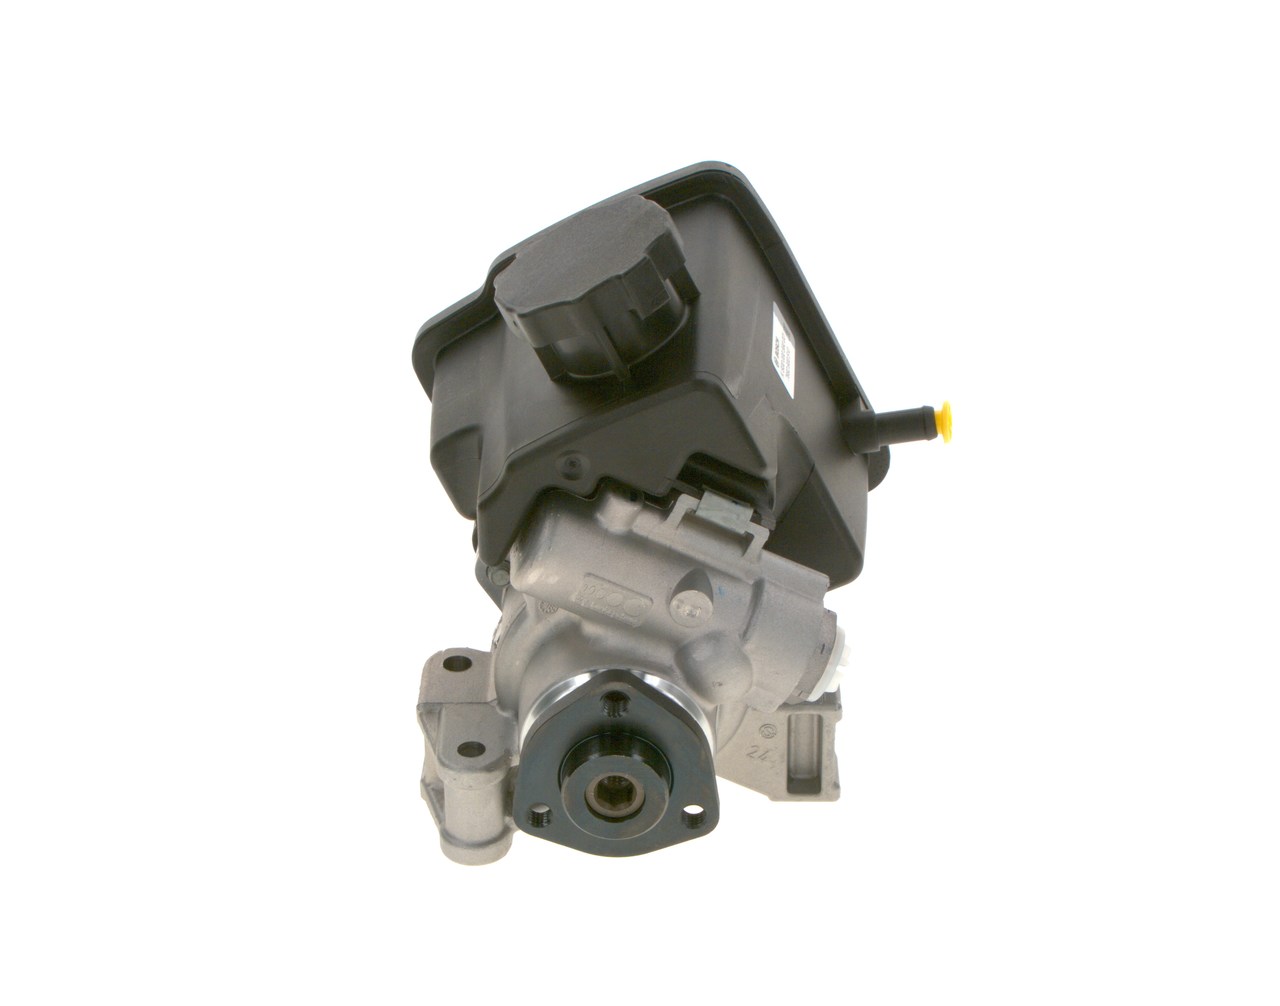 BOSCH K S00 000 590 Power steering pump Hydraulic, 120 bar, Pressure-limiting Valve, Vane Pump, Clockwise rotation